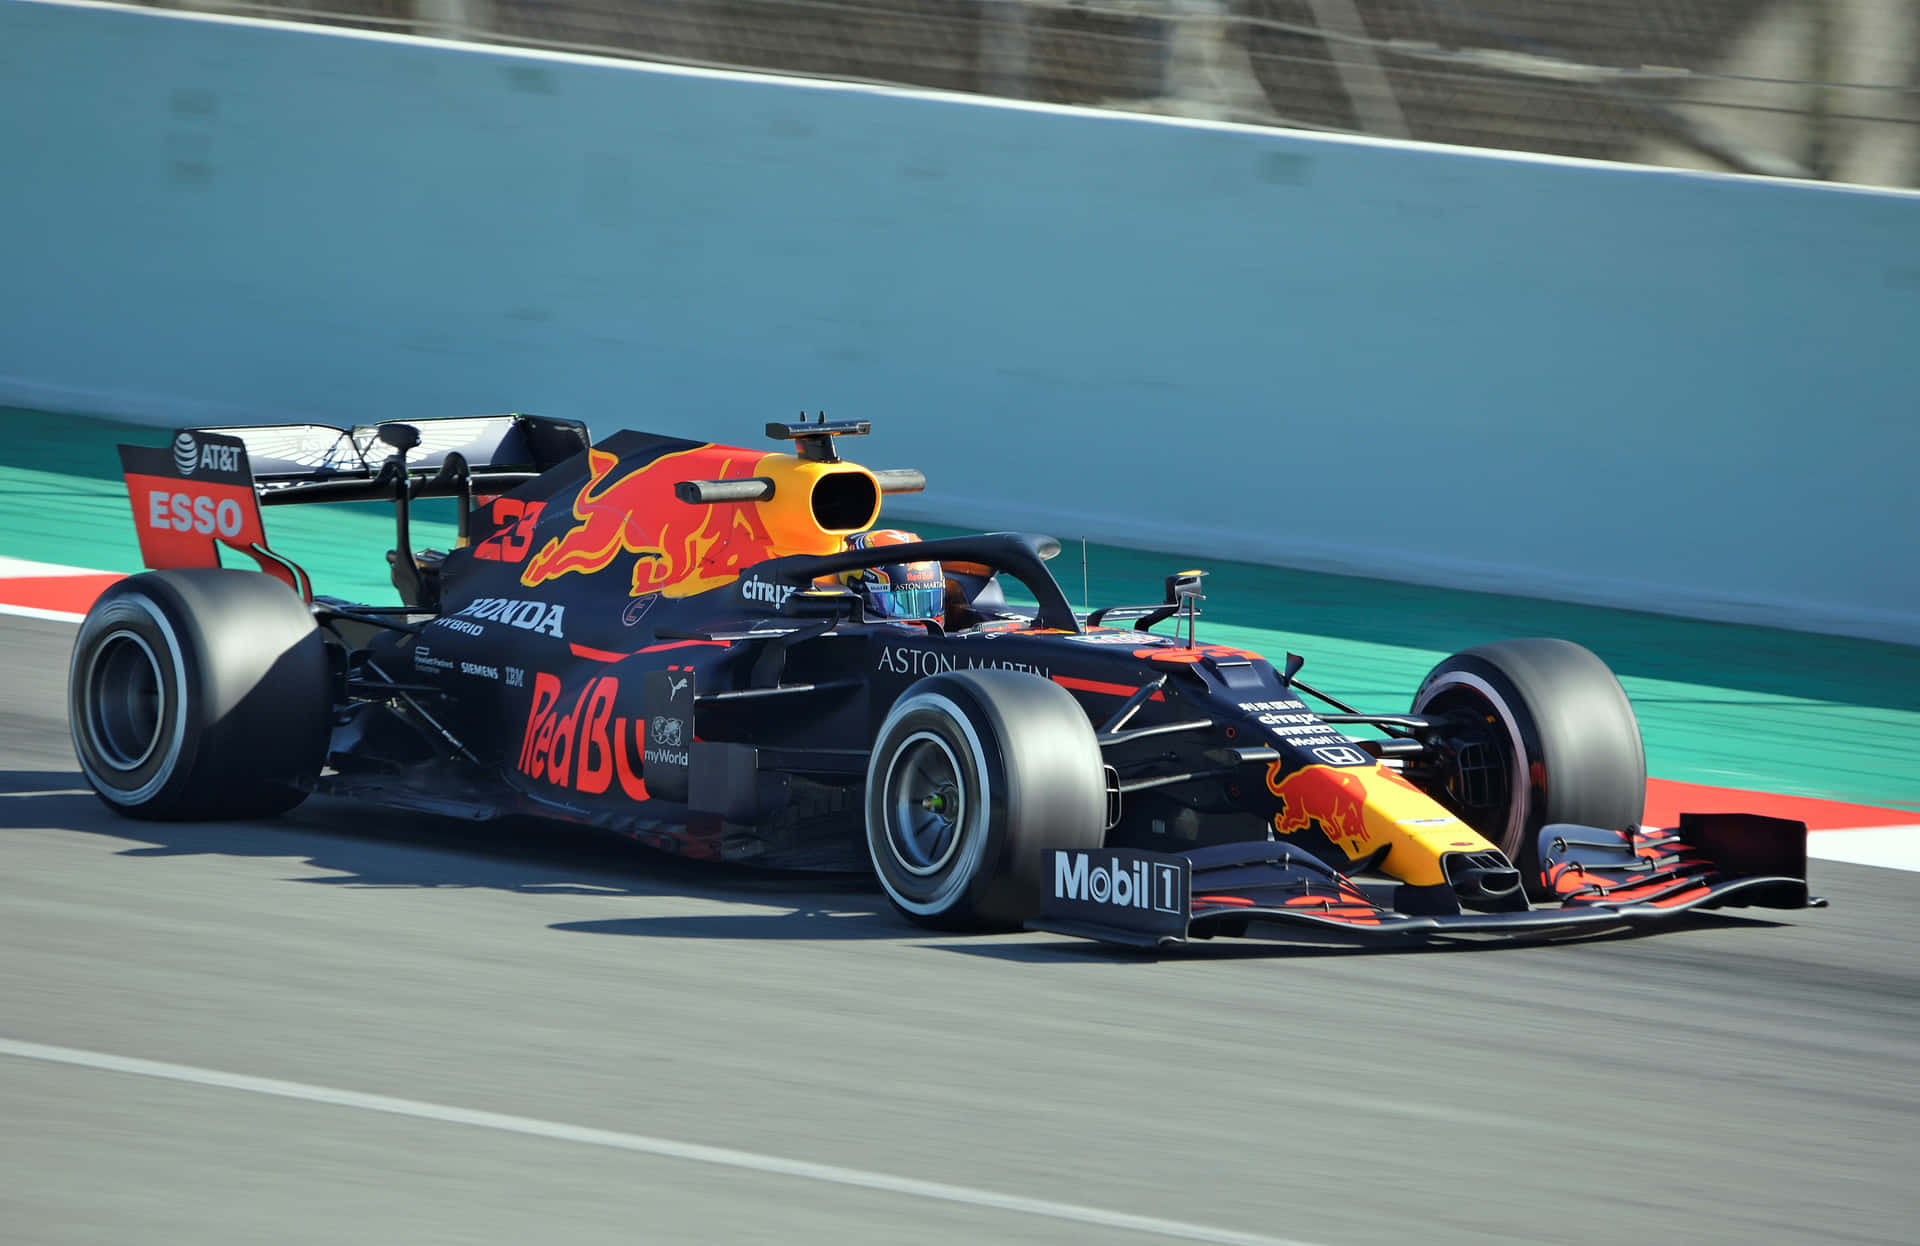 Red Bull Racing F1 Car Speeding On Track.jpg Wallpaper